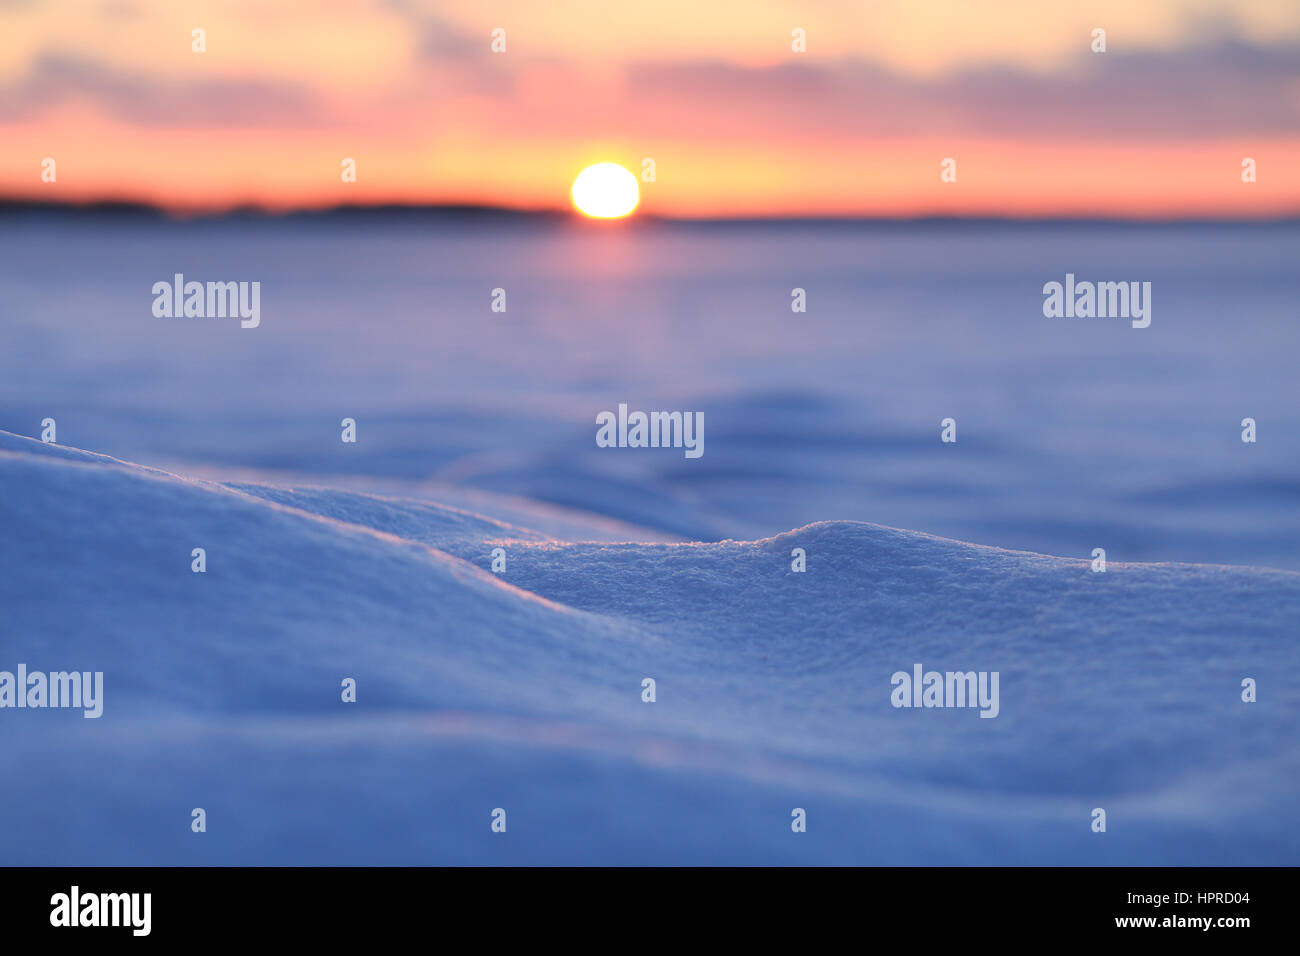 Rising sun illuminate snow. Winter morning landscape. Christmas theme with blured sunny backdrop. Stock Photo